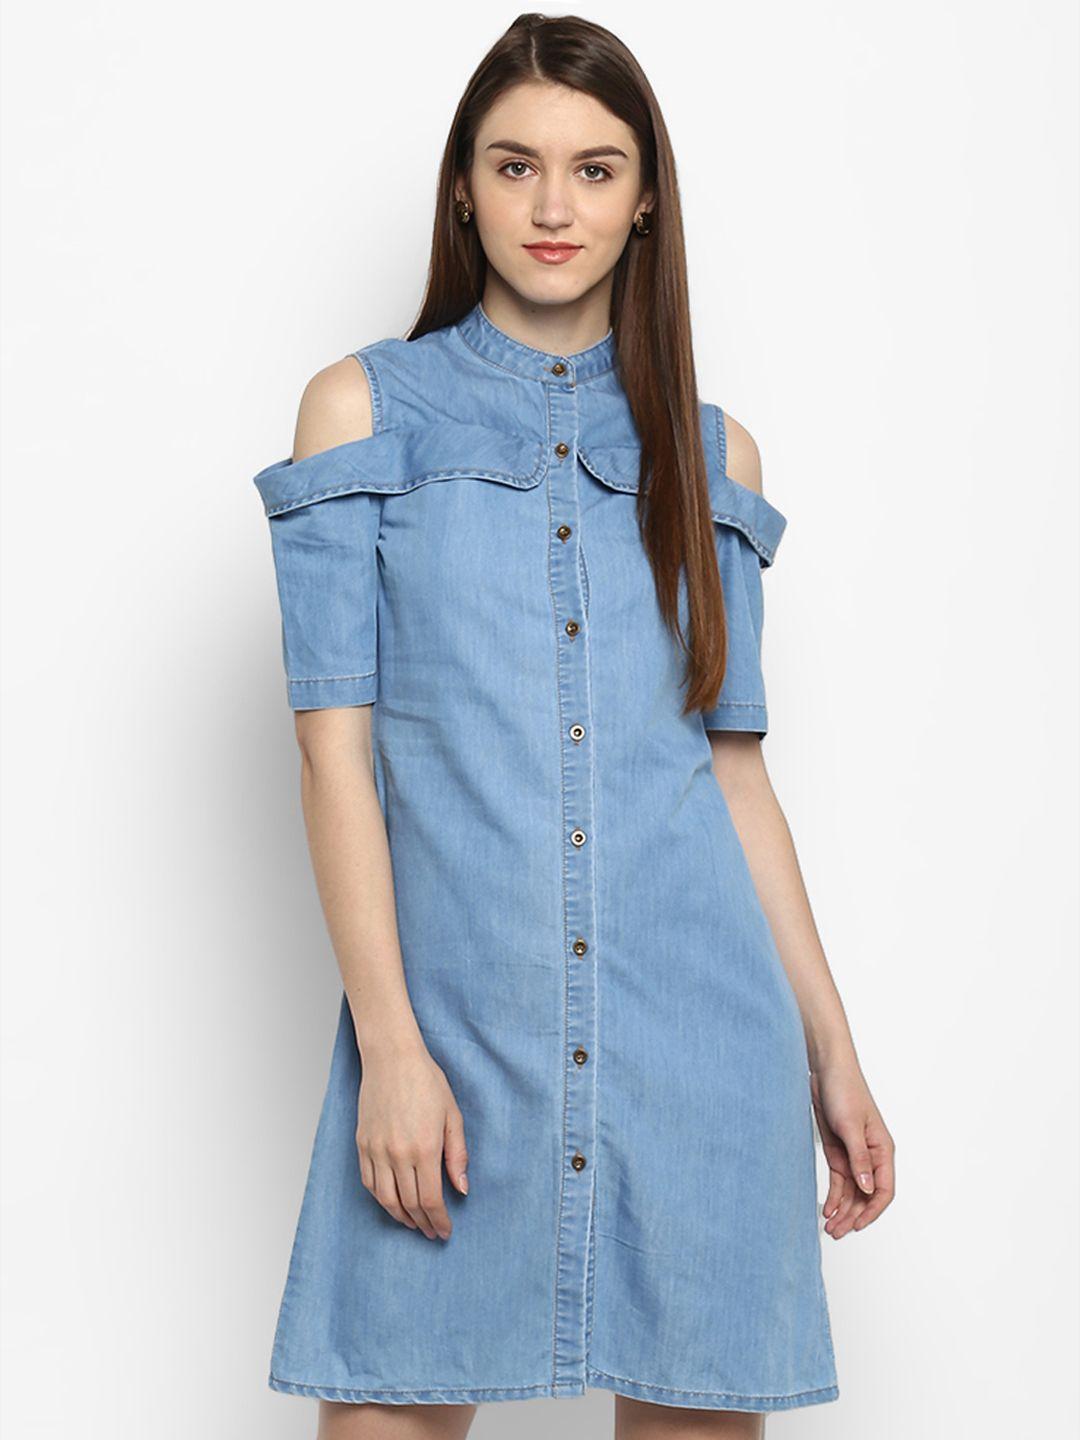 stylestone women blue solid denim shirt dress